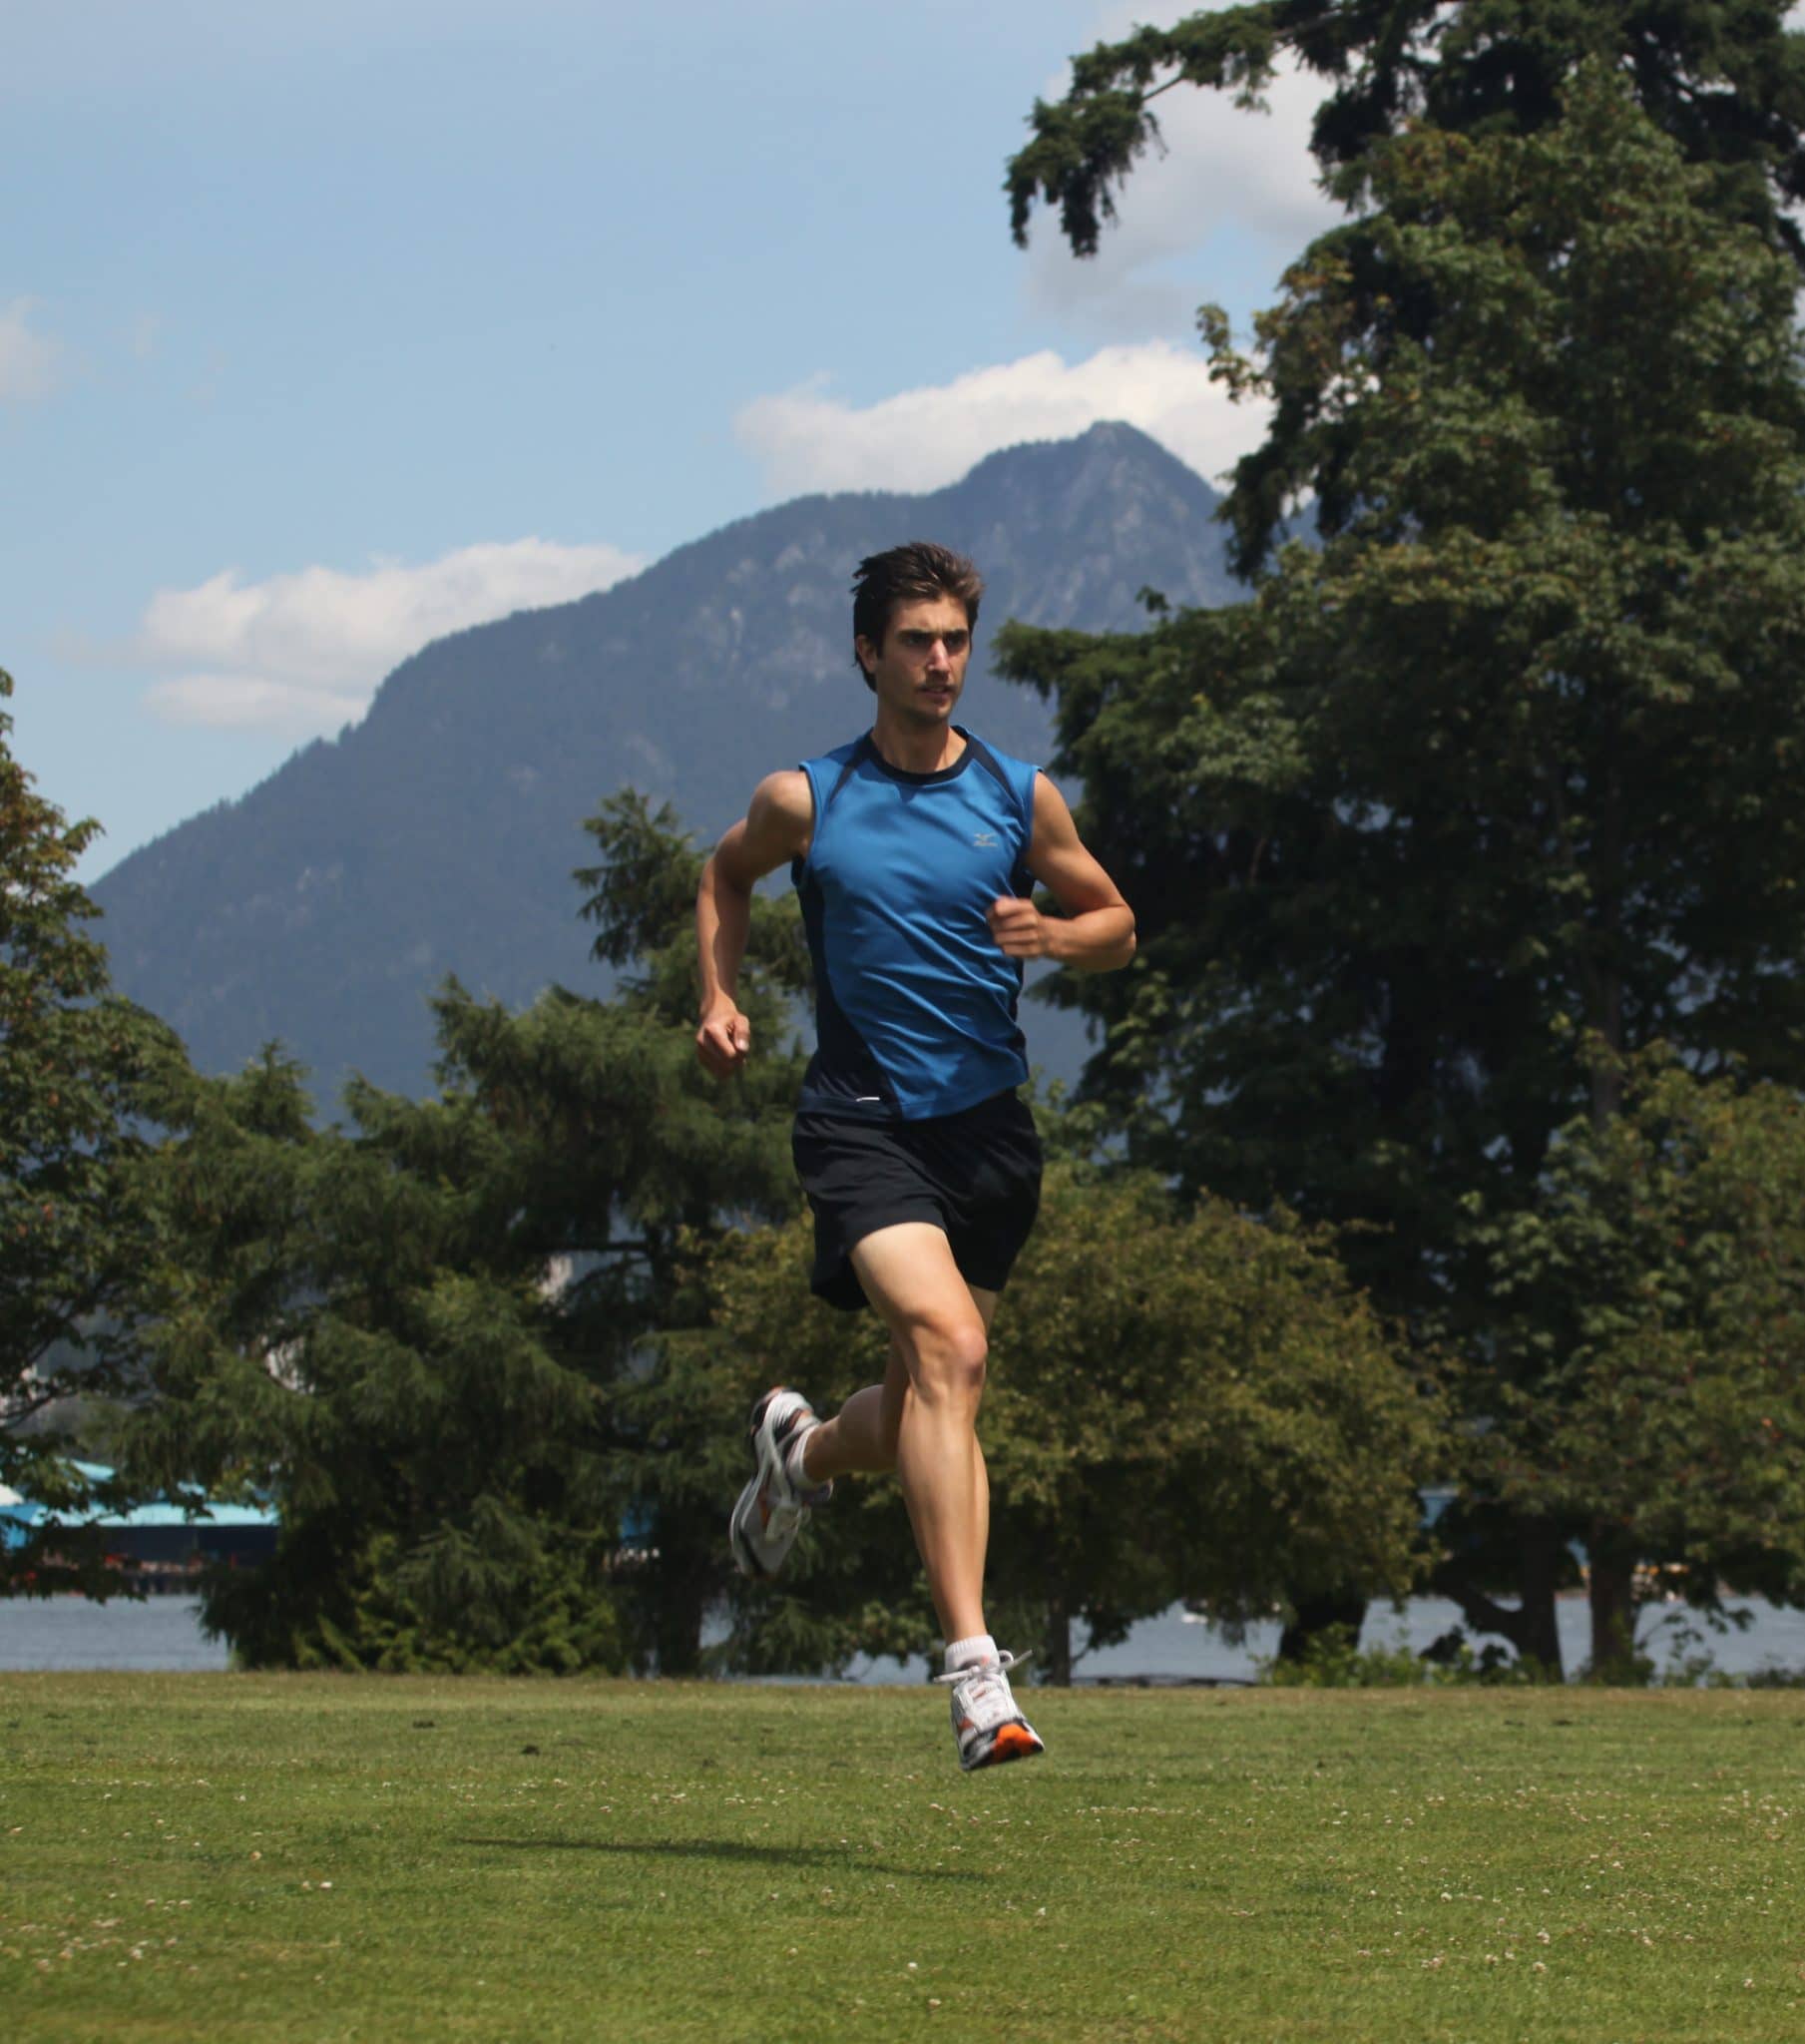 Brendan Brazier Running with mountain in background